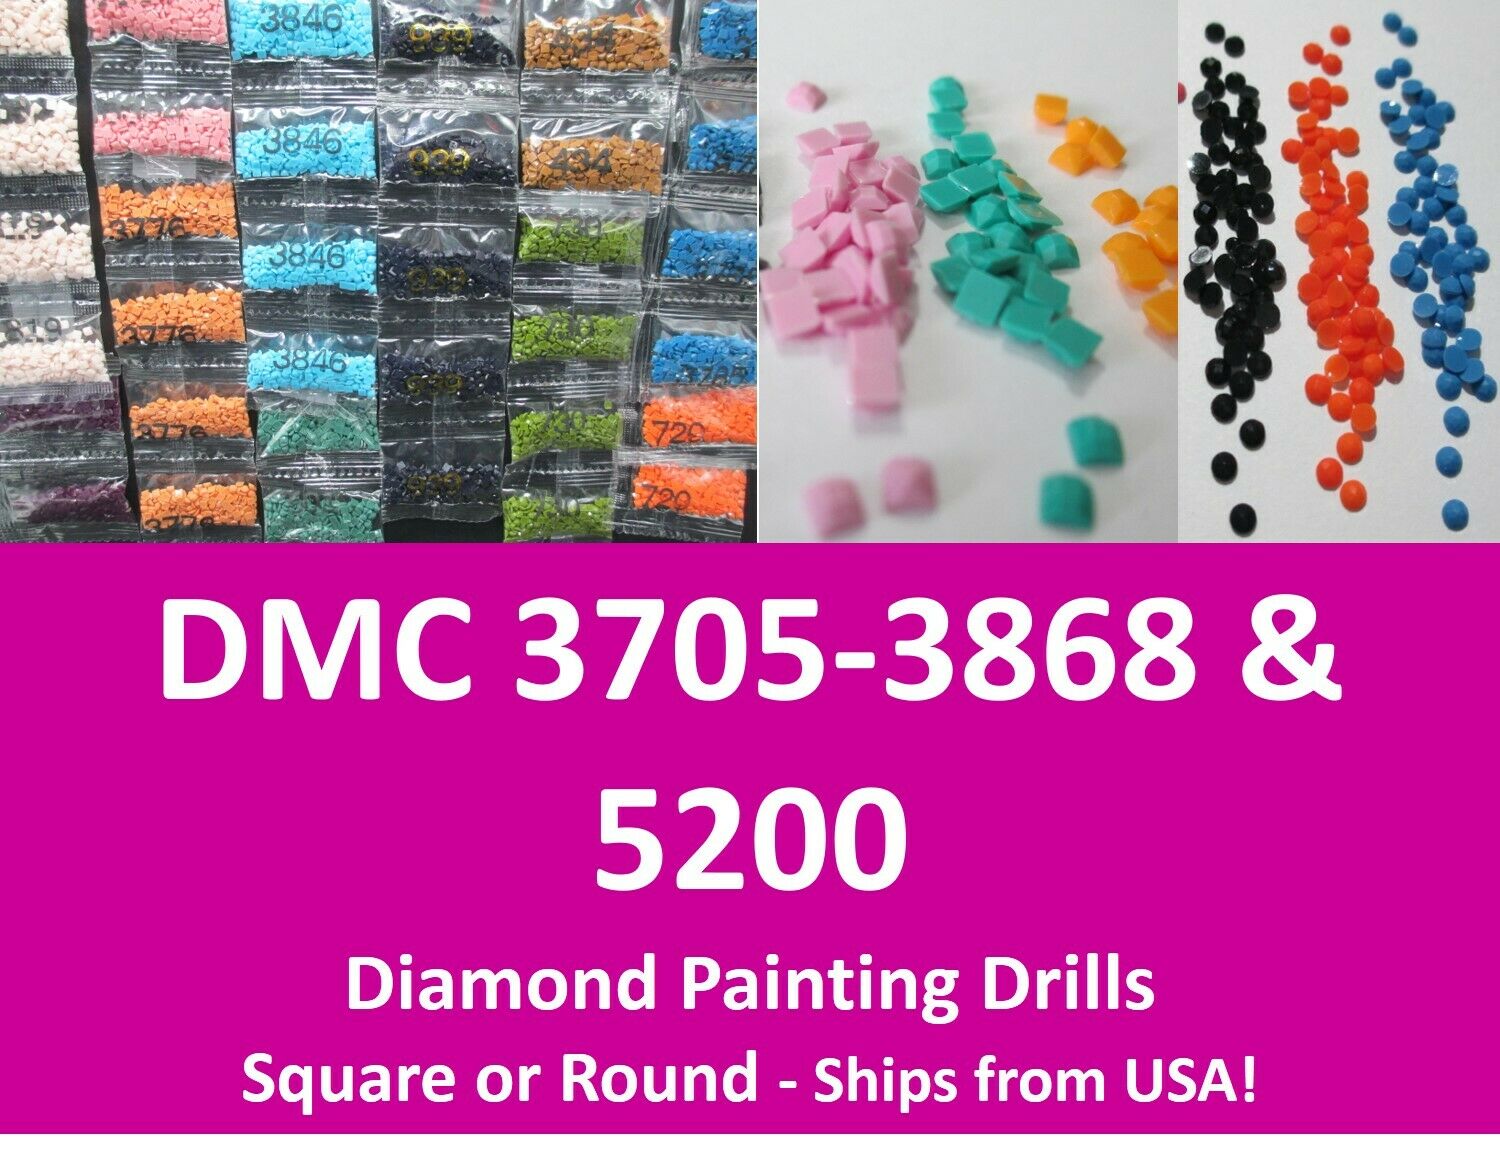 Diamond Painting Drills Dmc 3705-3868, 5200 - Square Or Round - Individual Bags